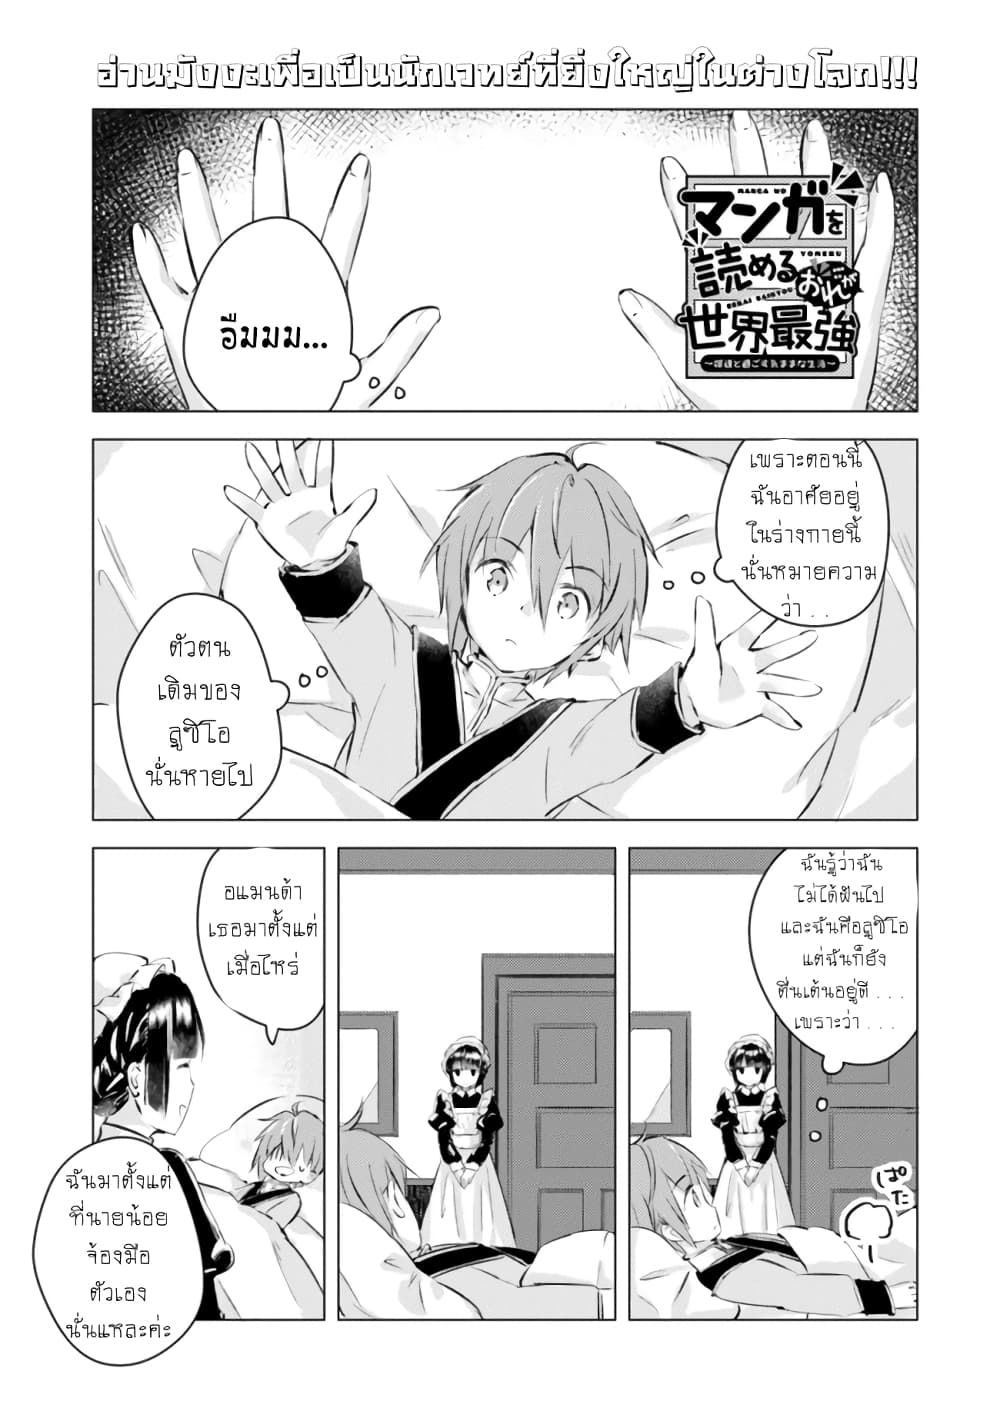 Manga wo Yomeru Ore ga Sekai Saikyou ตอนที่ 2 (2)